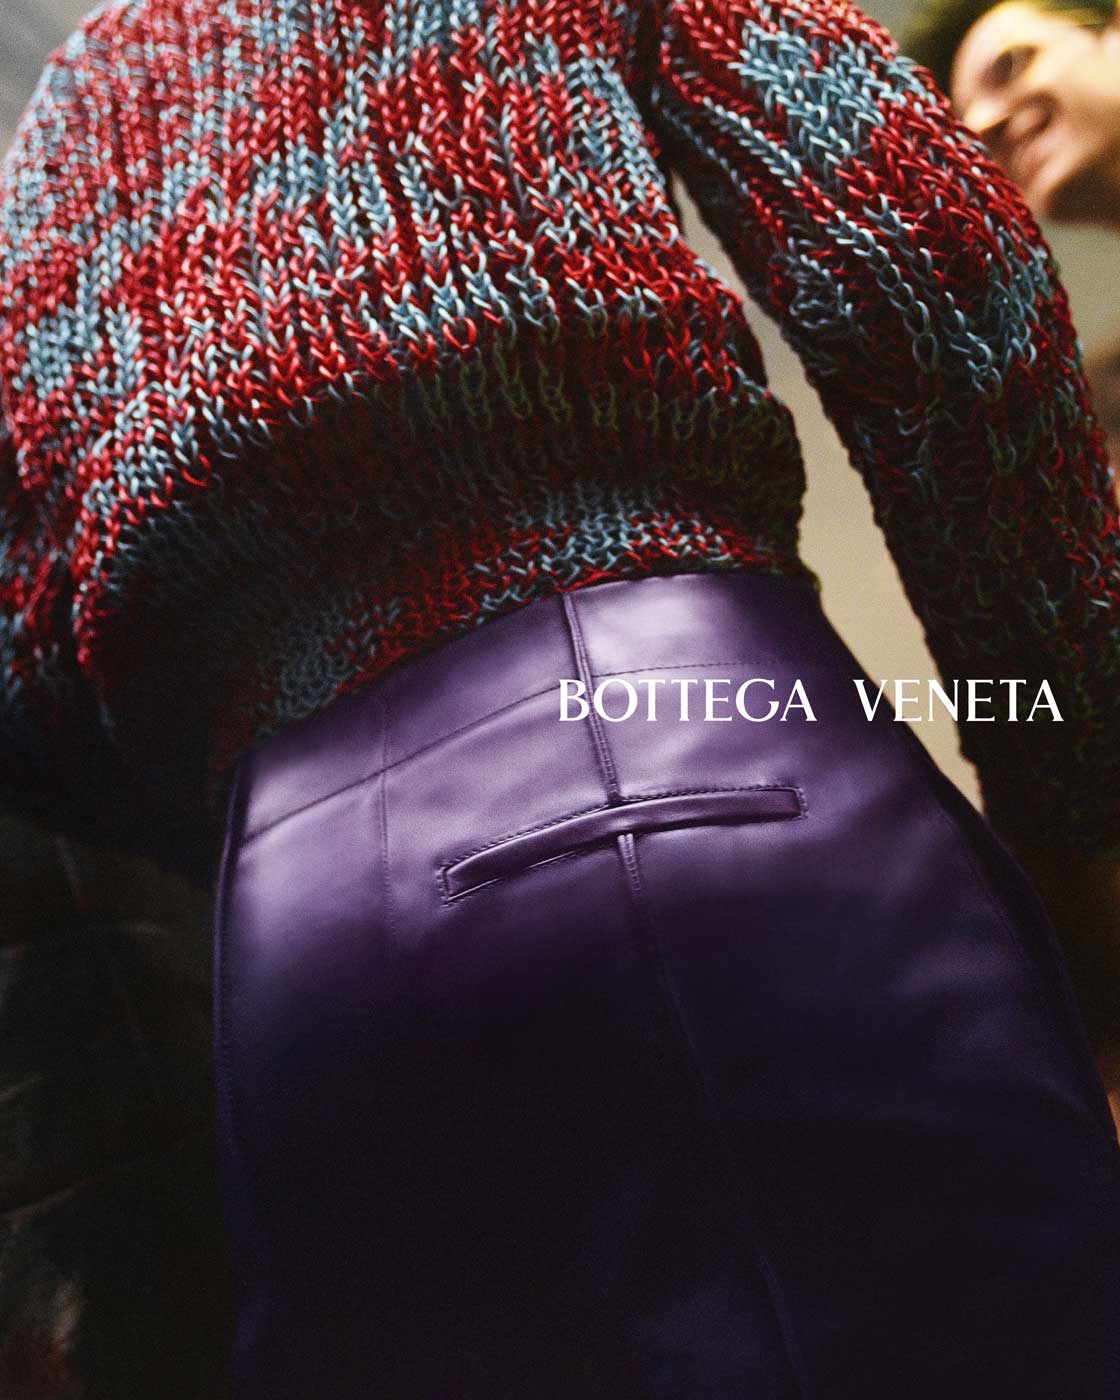 Bottega Veneta's Campaign Highlights The Bottegas Of The World